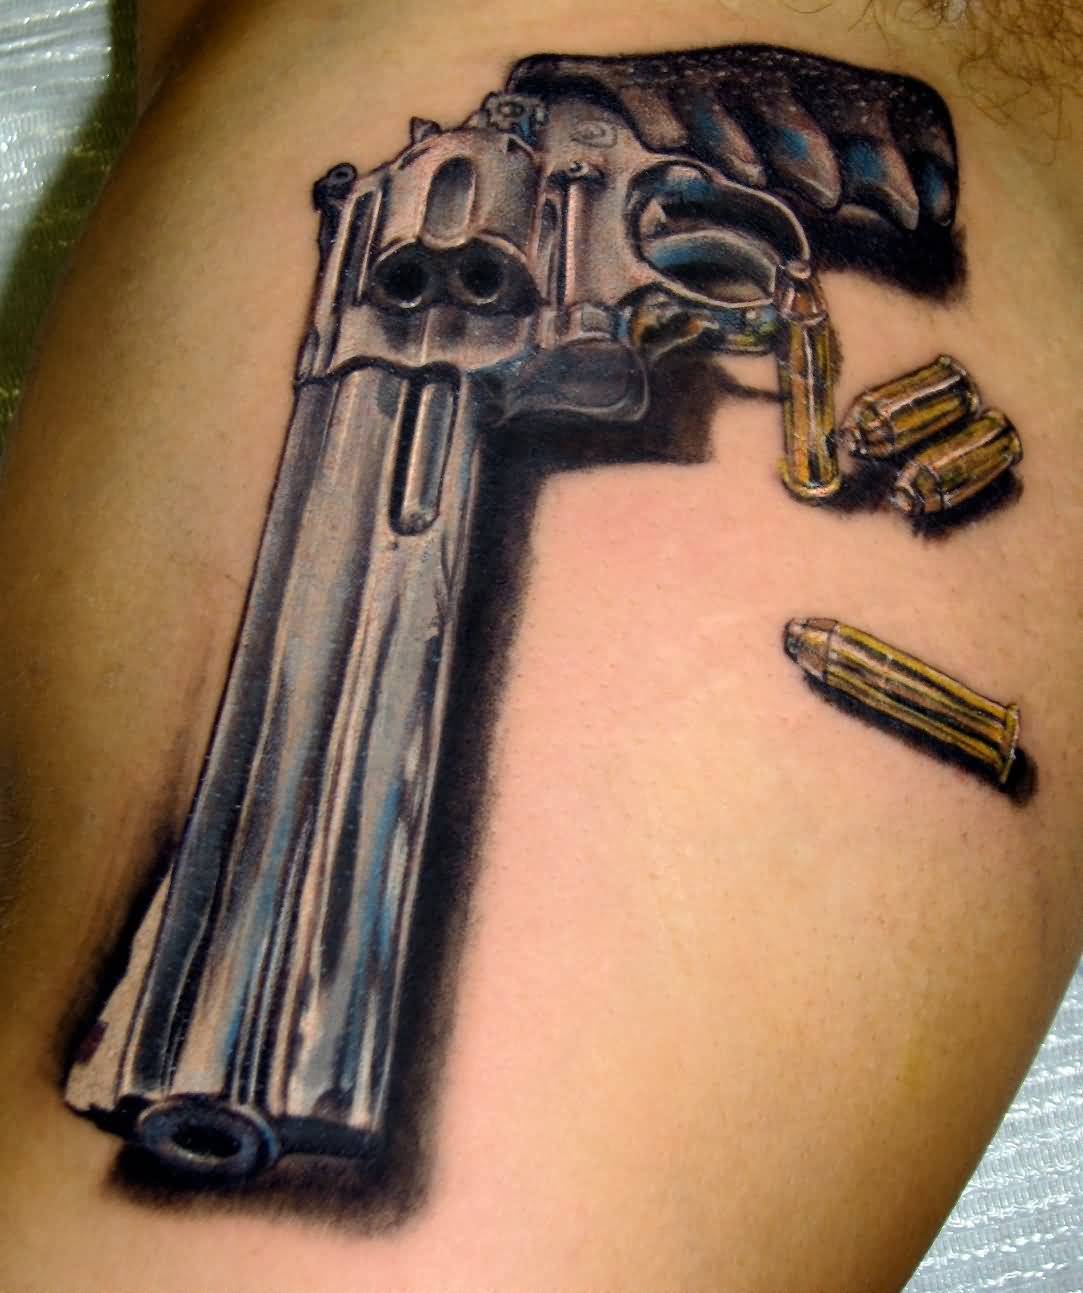 Pistol And Bullets Tattoo Design Idea